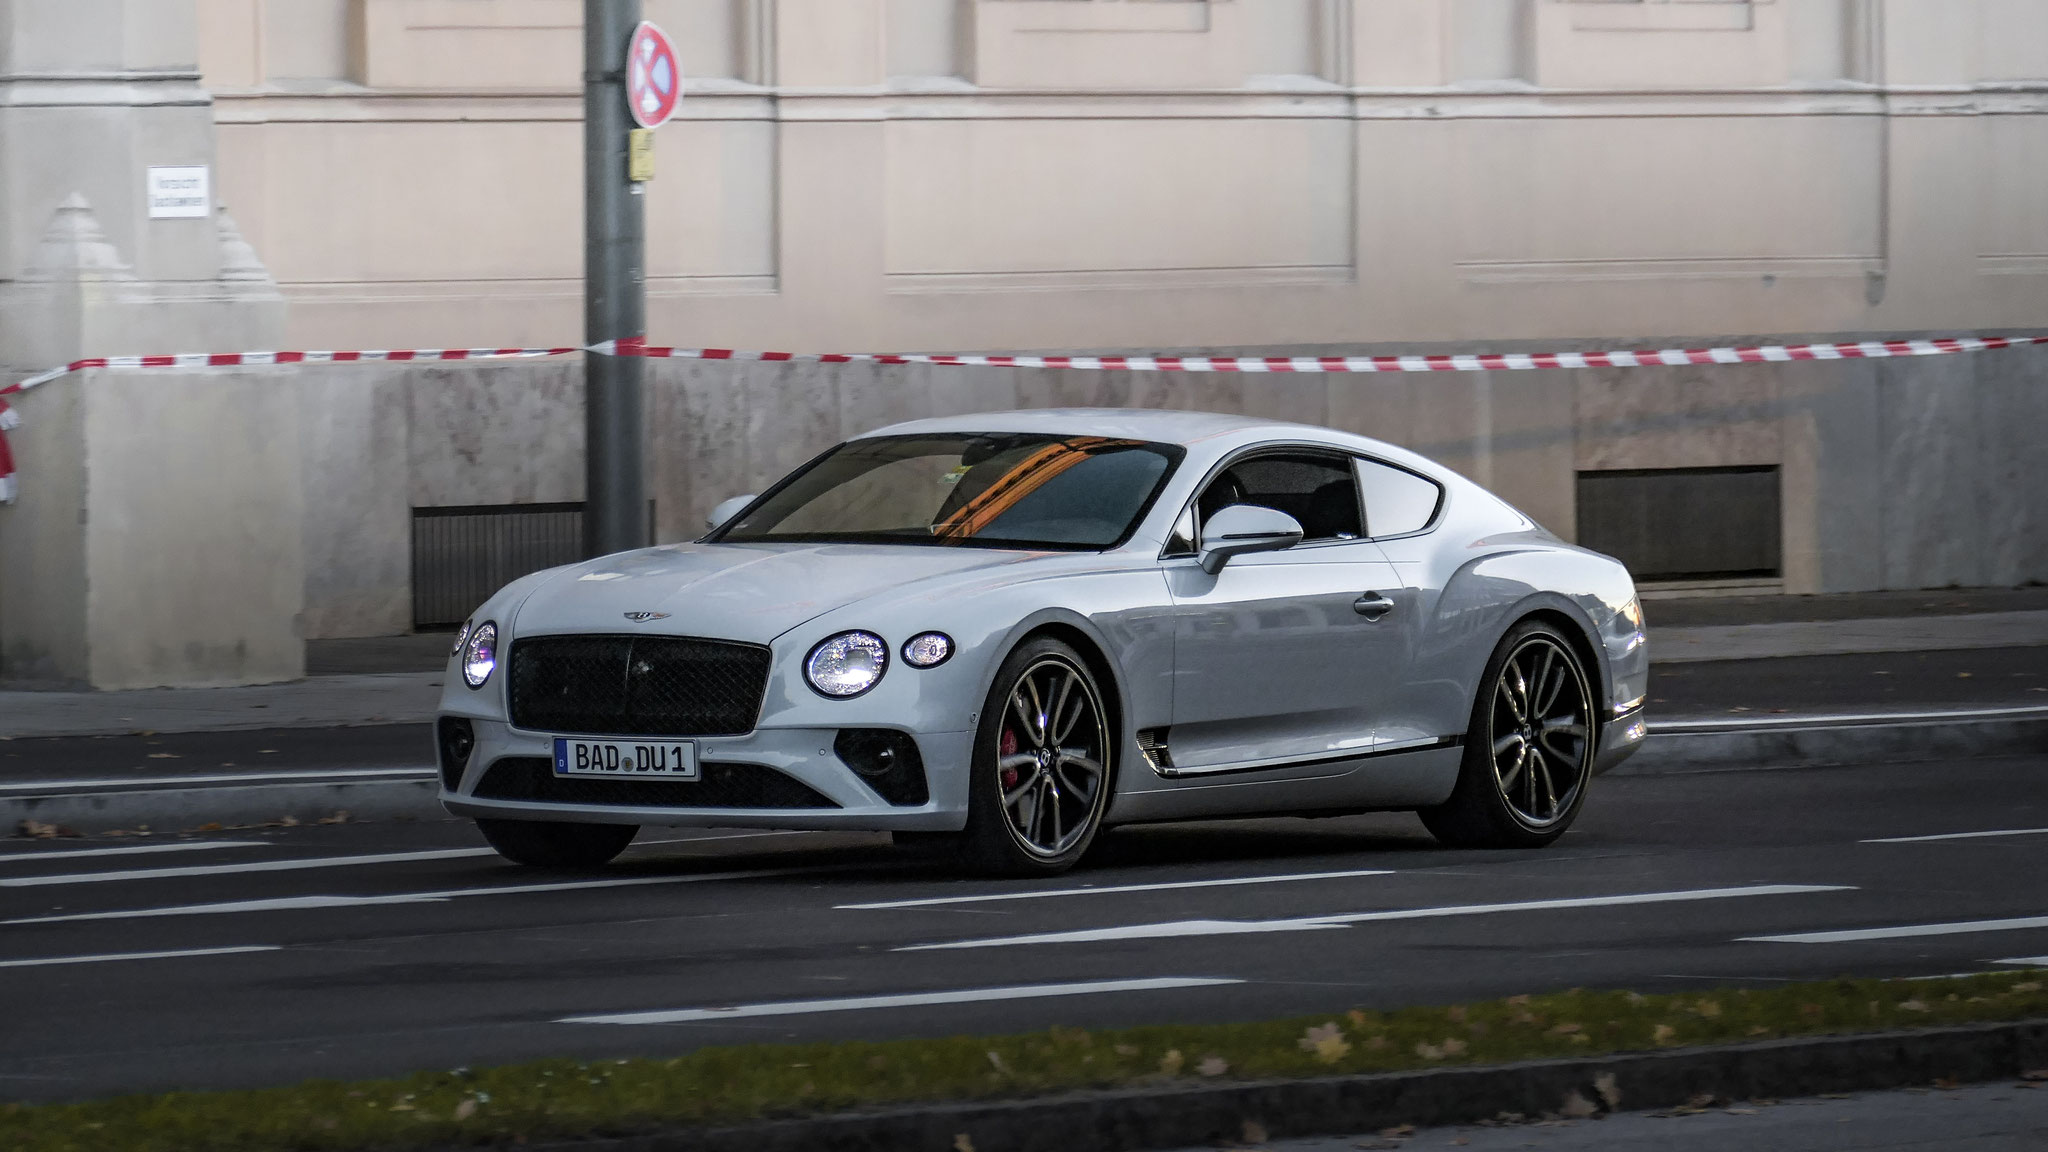 Bentley Continental GT - BAD-DU1